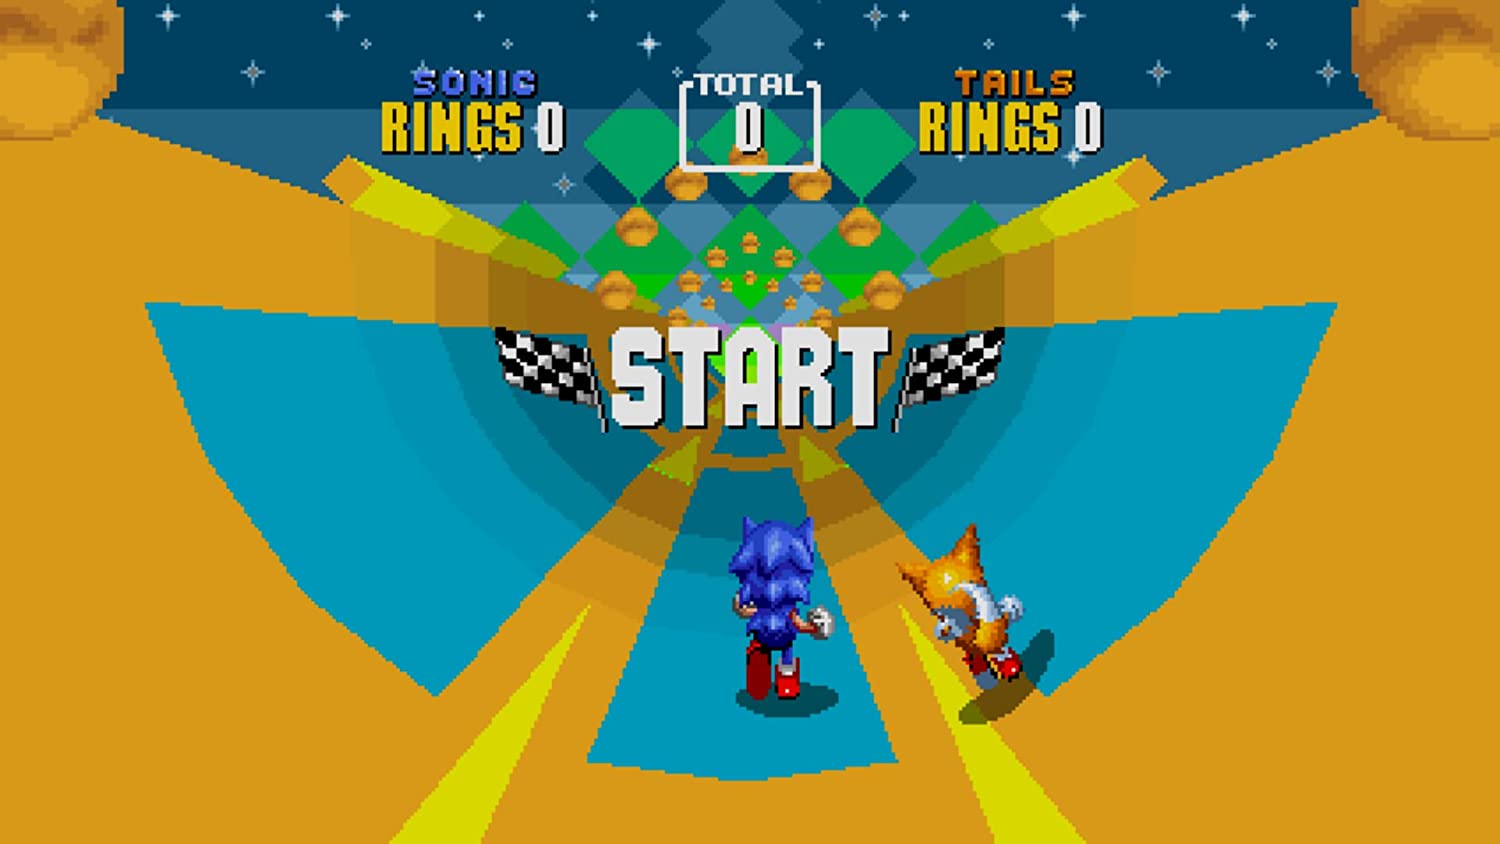 Obrázek PS4 - Sonic Origins Plus Limited Edition